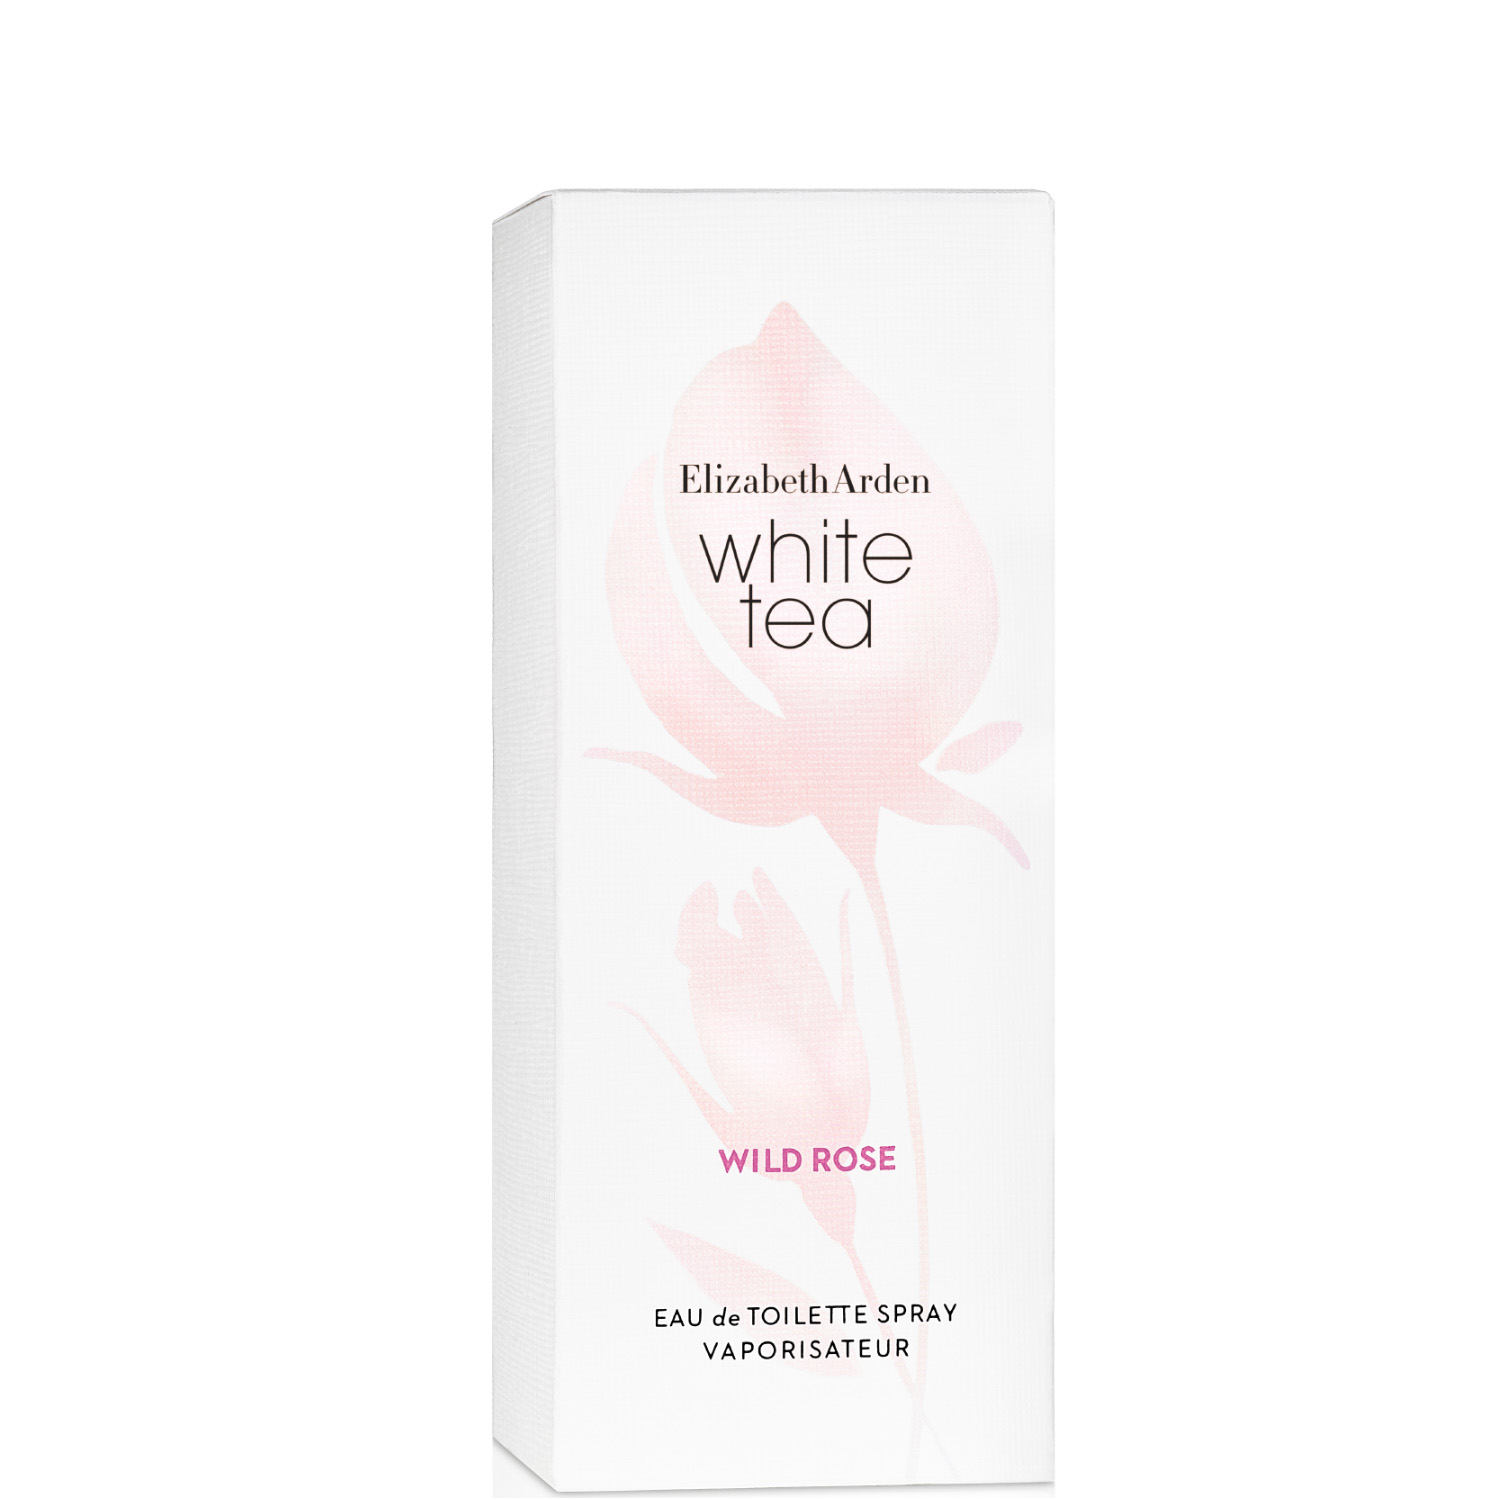 Elizabeth Arden White Tea Wild Rose Eau de Toilette 50ml